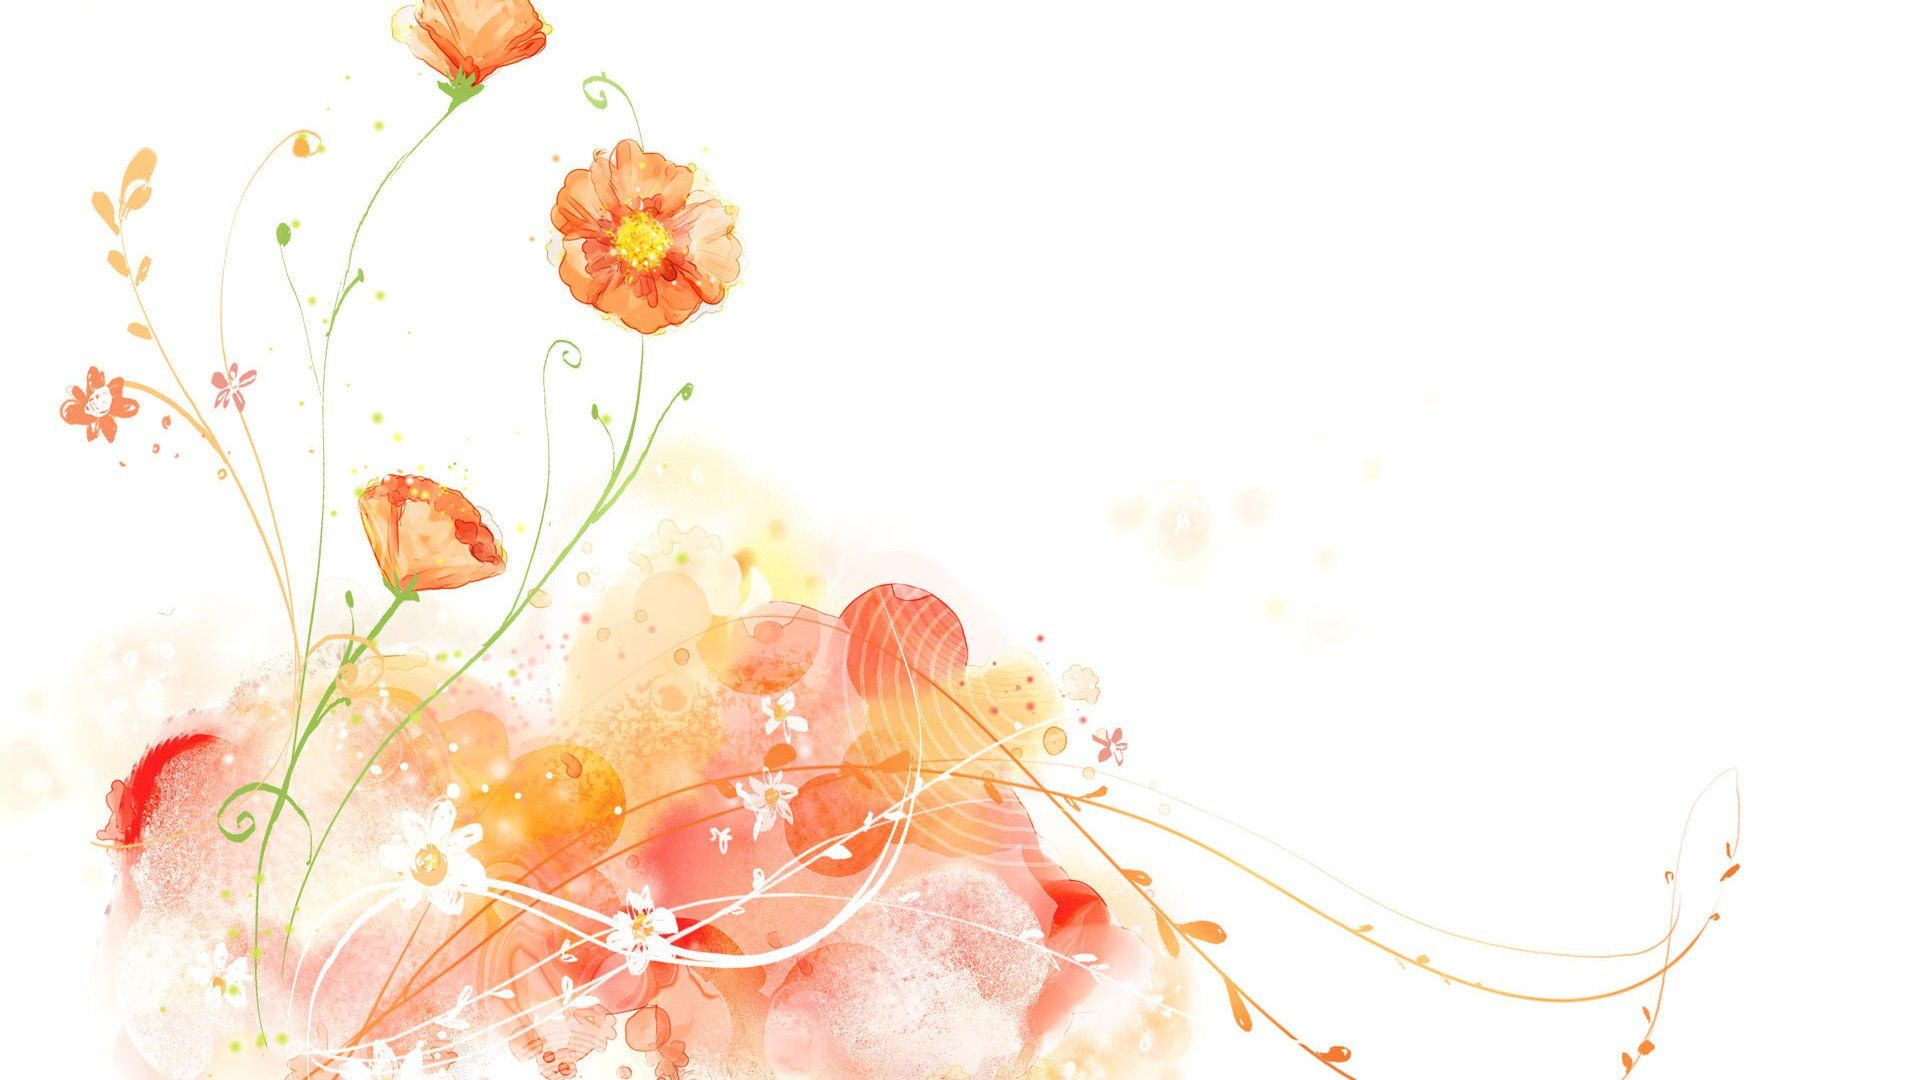 1920x1080 38+] Watercolor Flowers Wallpaper on | Watercolor flowers, Flower wallpaper, Watercolor floral wallpaper